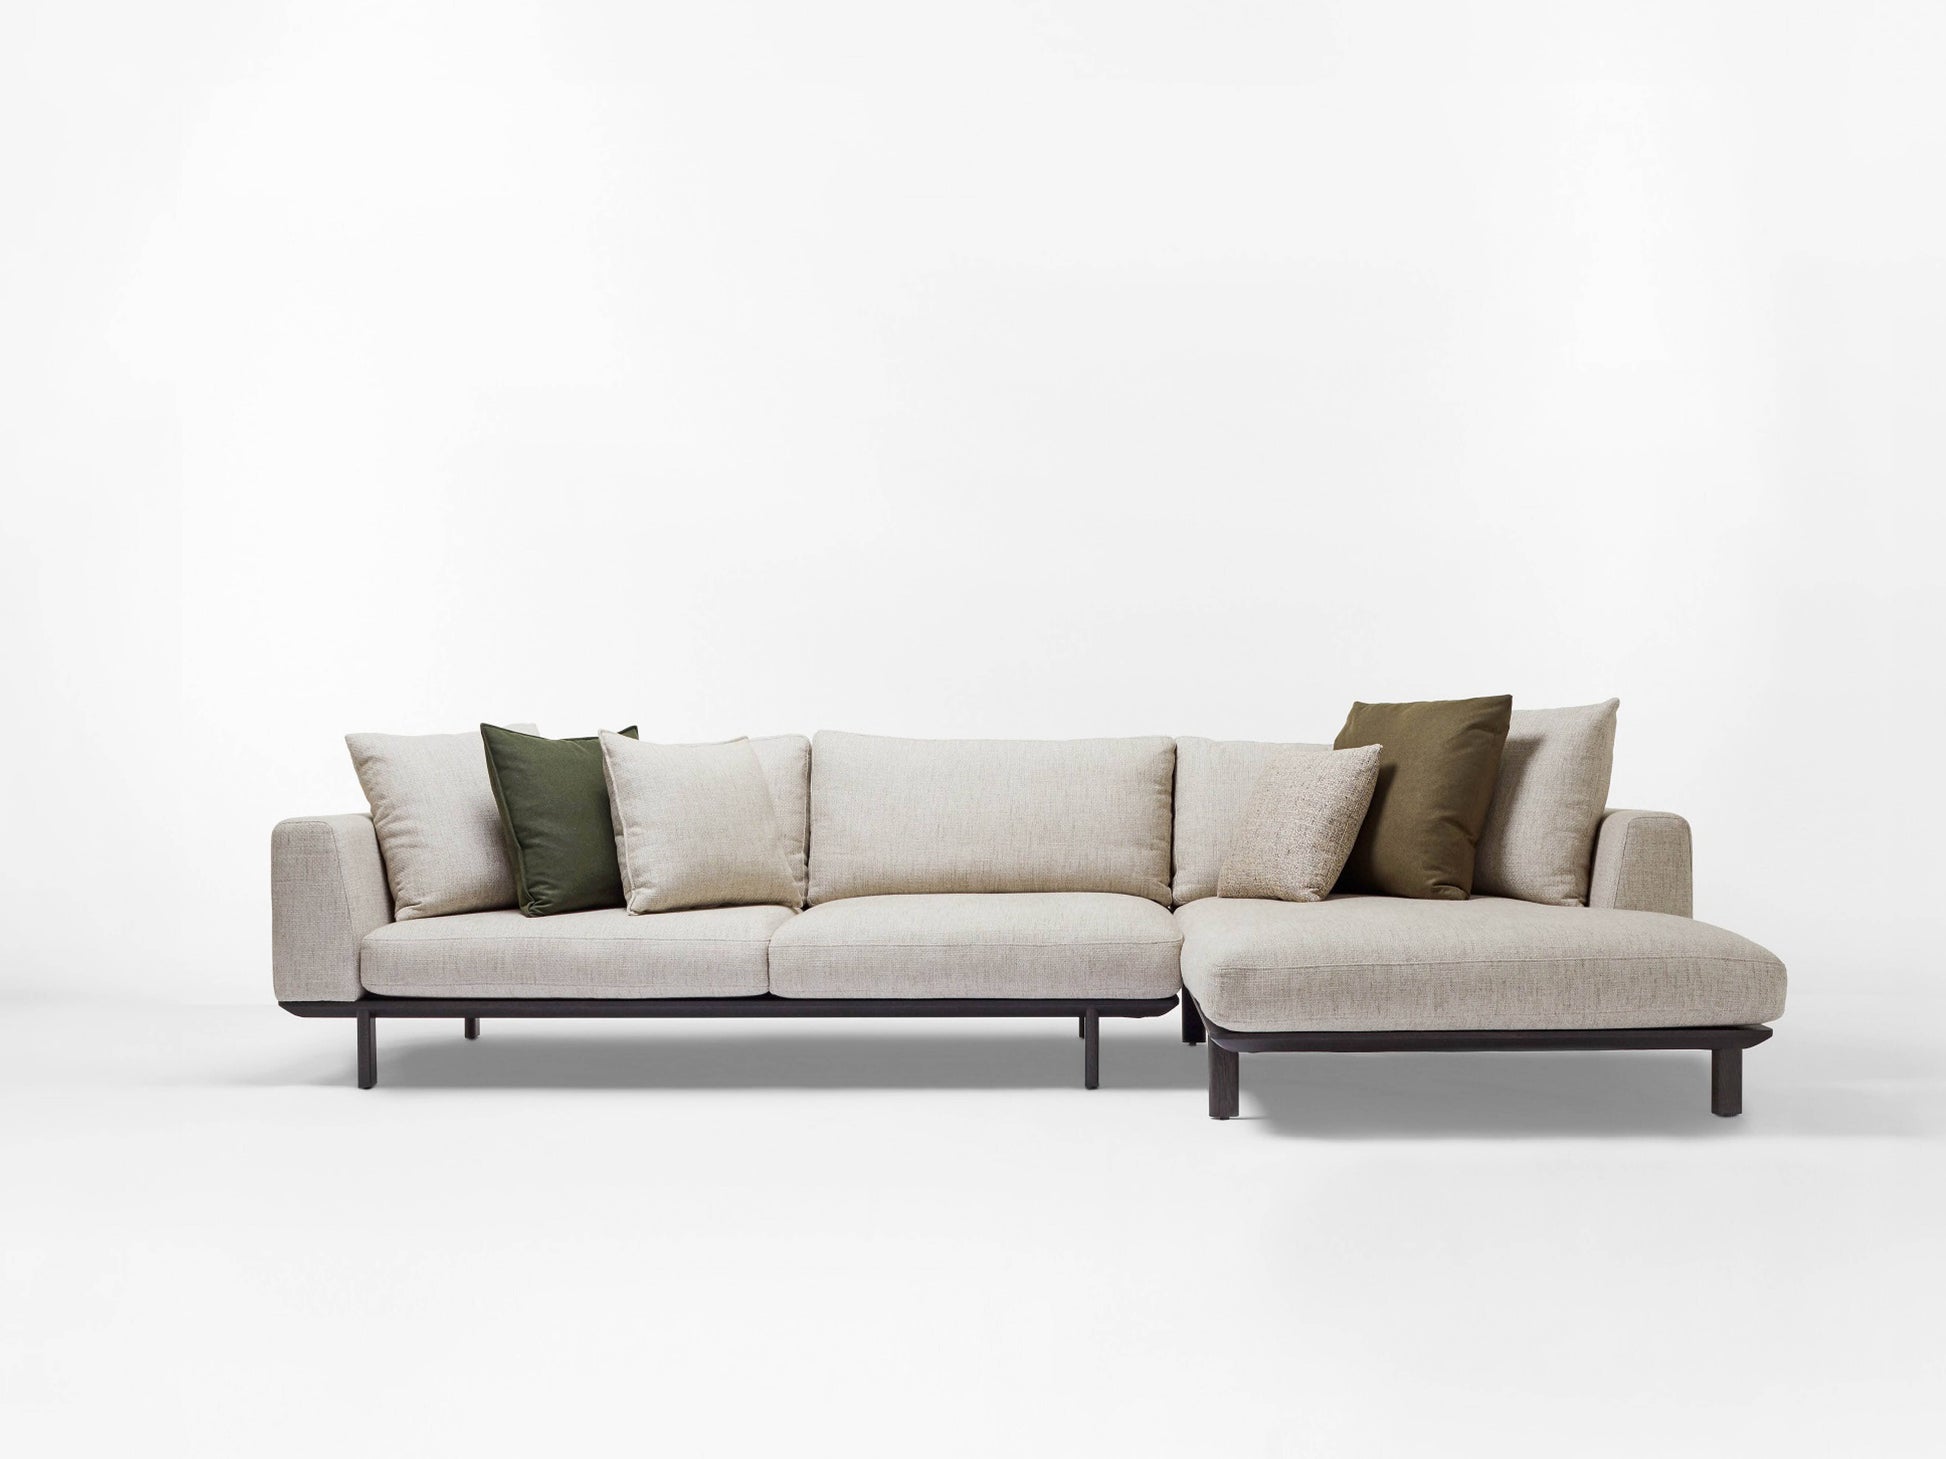 Otway Modular Sofa 15% Off Indoor Furniture Kett 